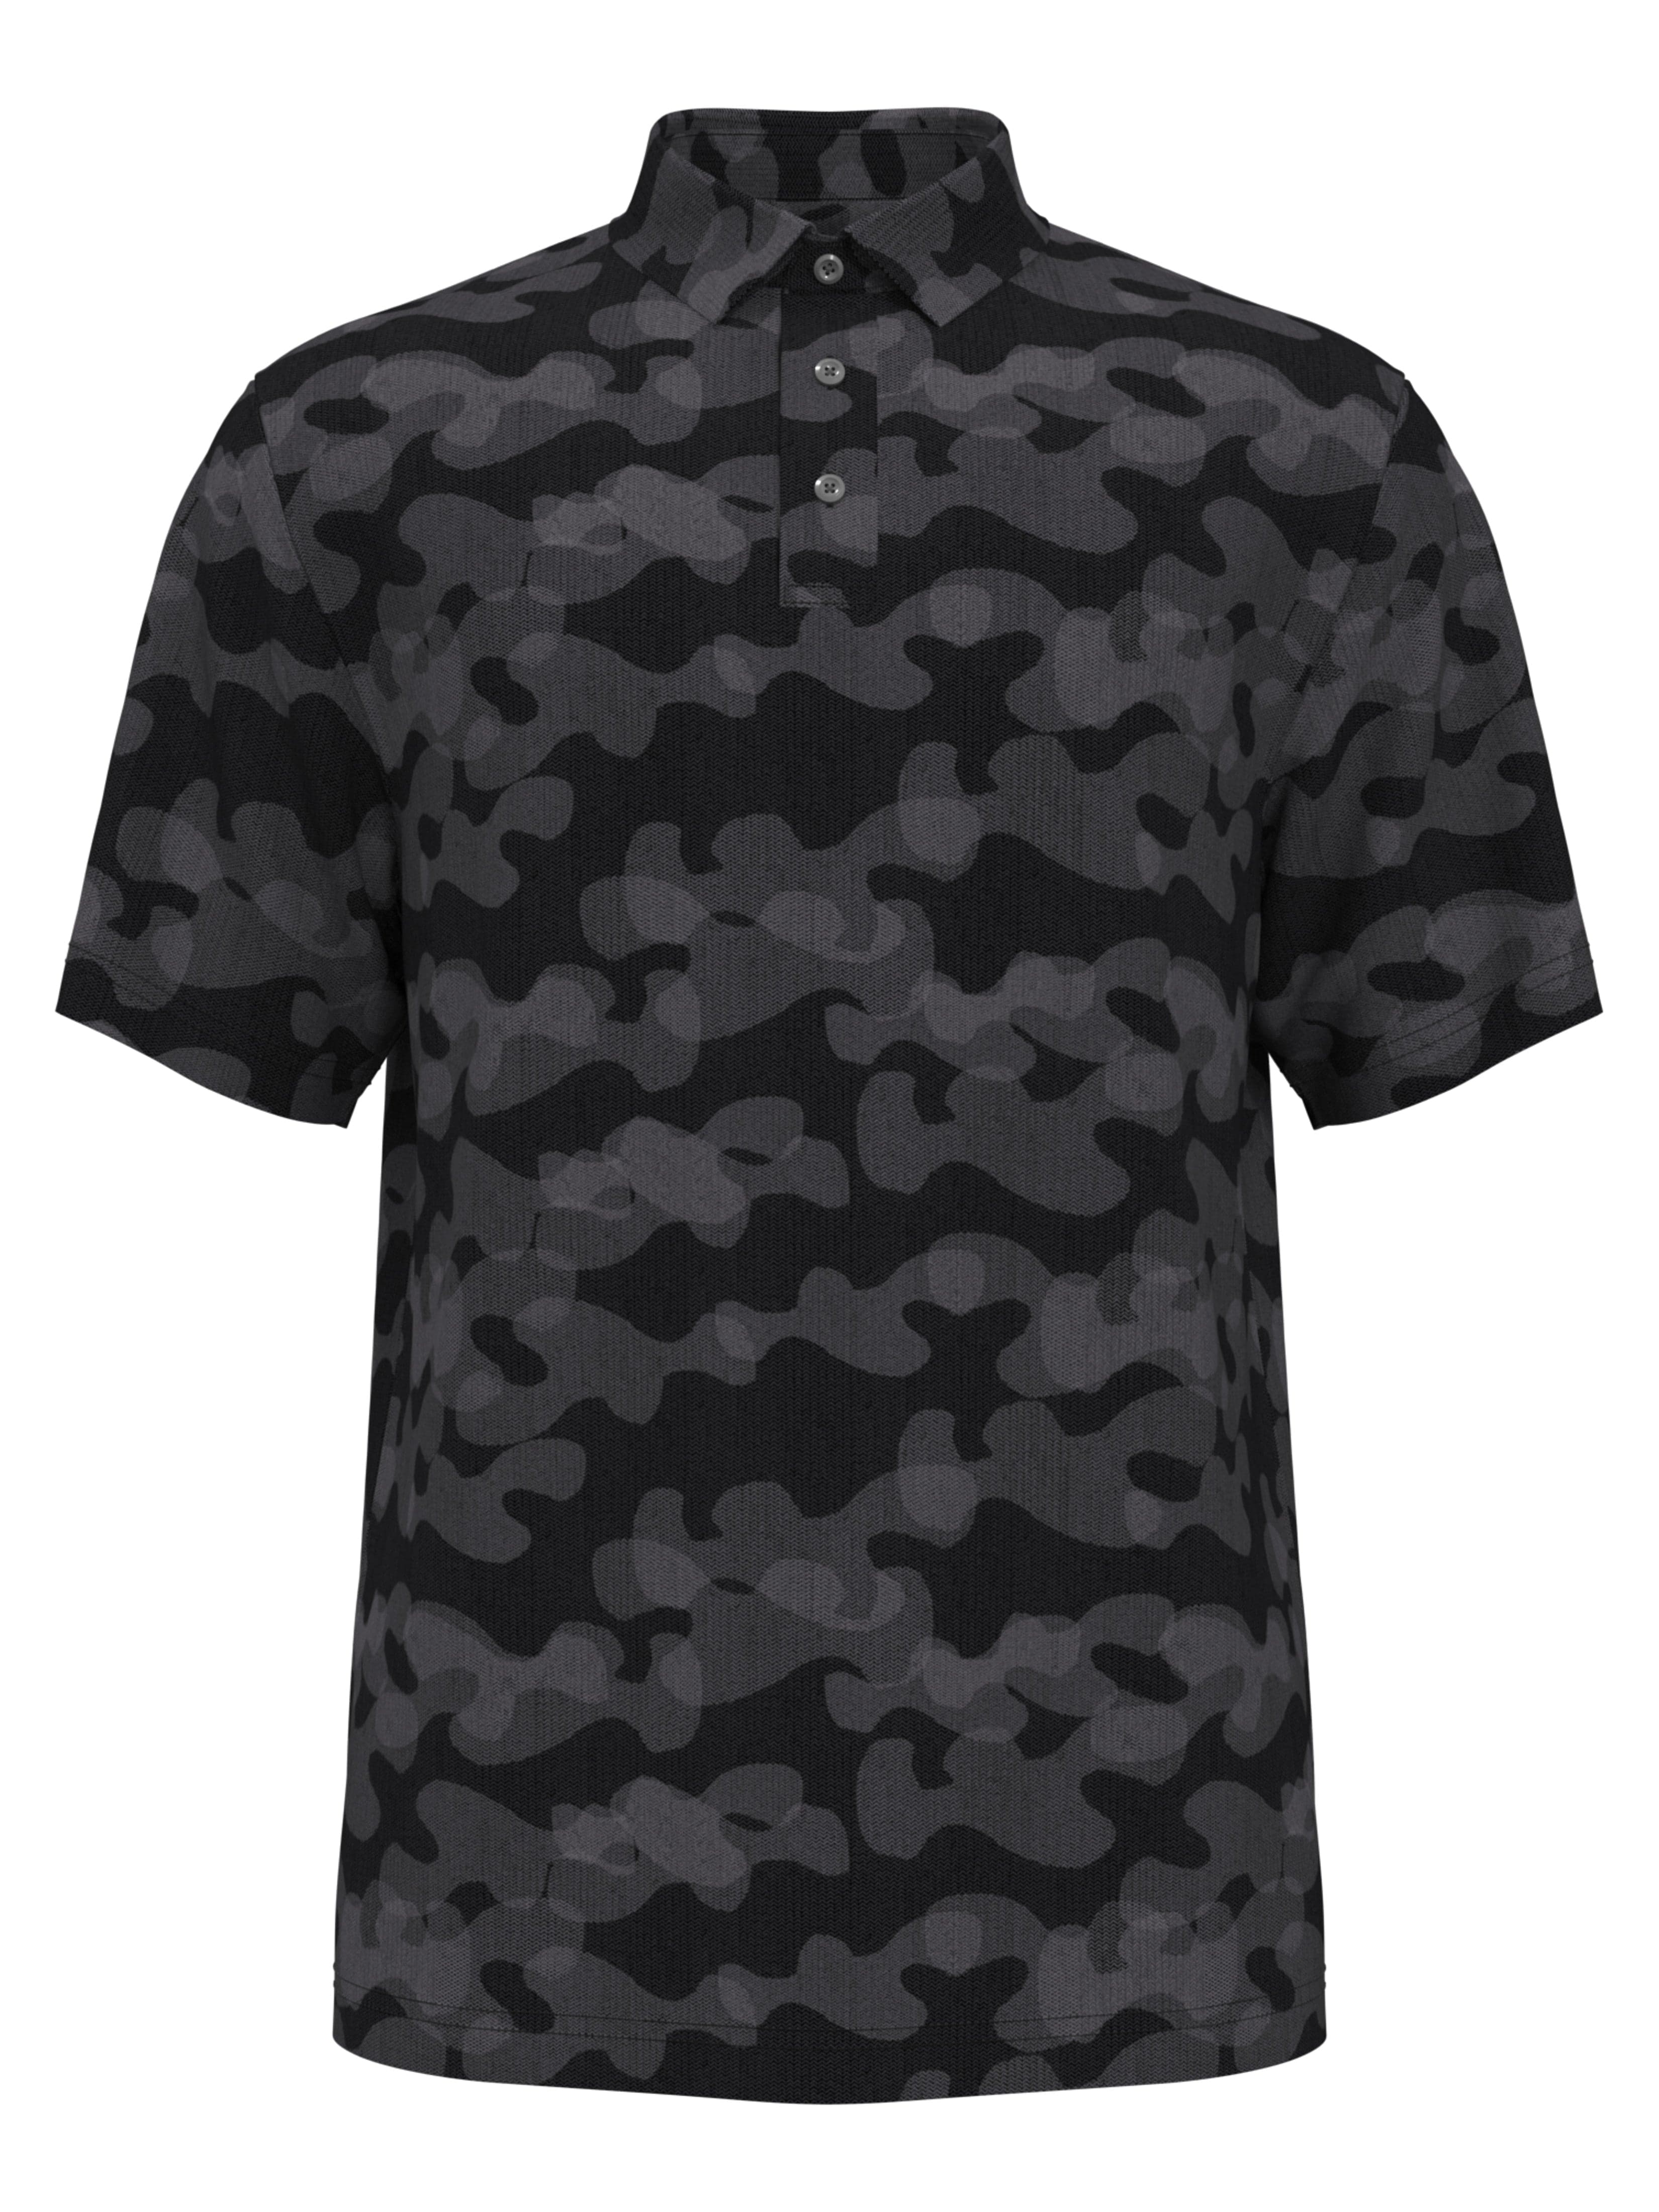 PGA TOUR Apparel Boys Camo Print Herringbone Golf Polo Shirt, Size Large, Black, 100% Polyester | Golf Apparel Shop